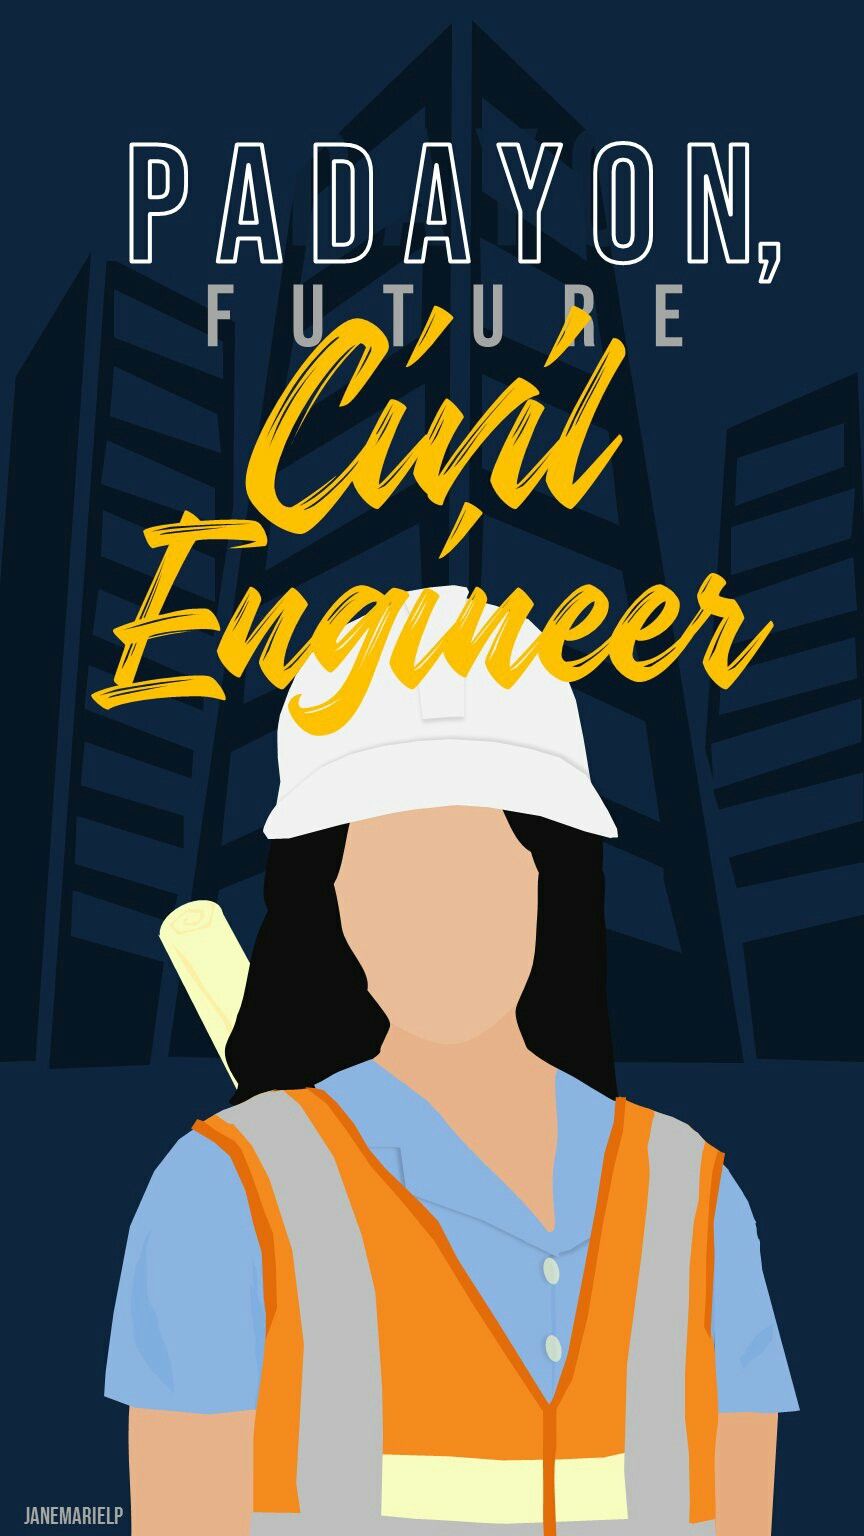 Padayon Future Civil Engineer Girl